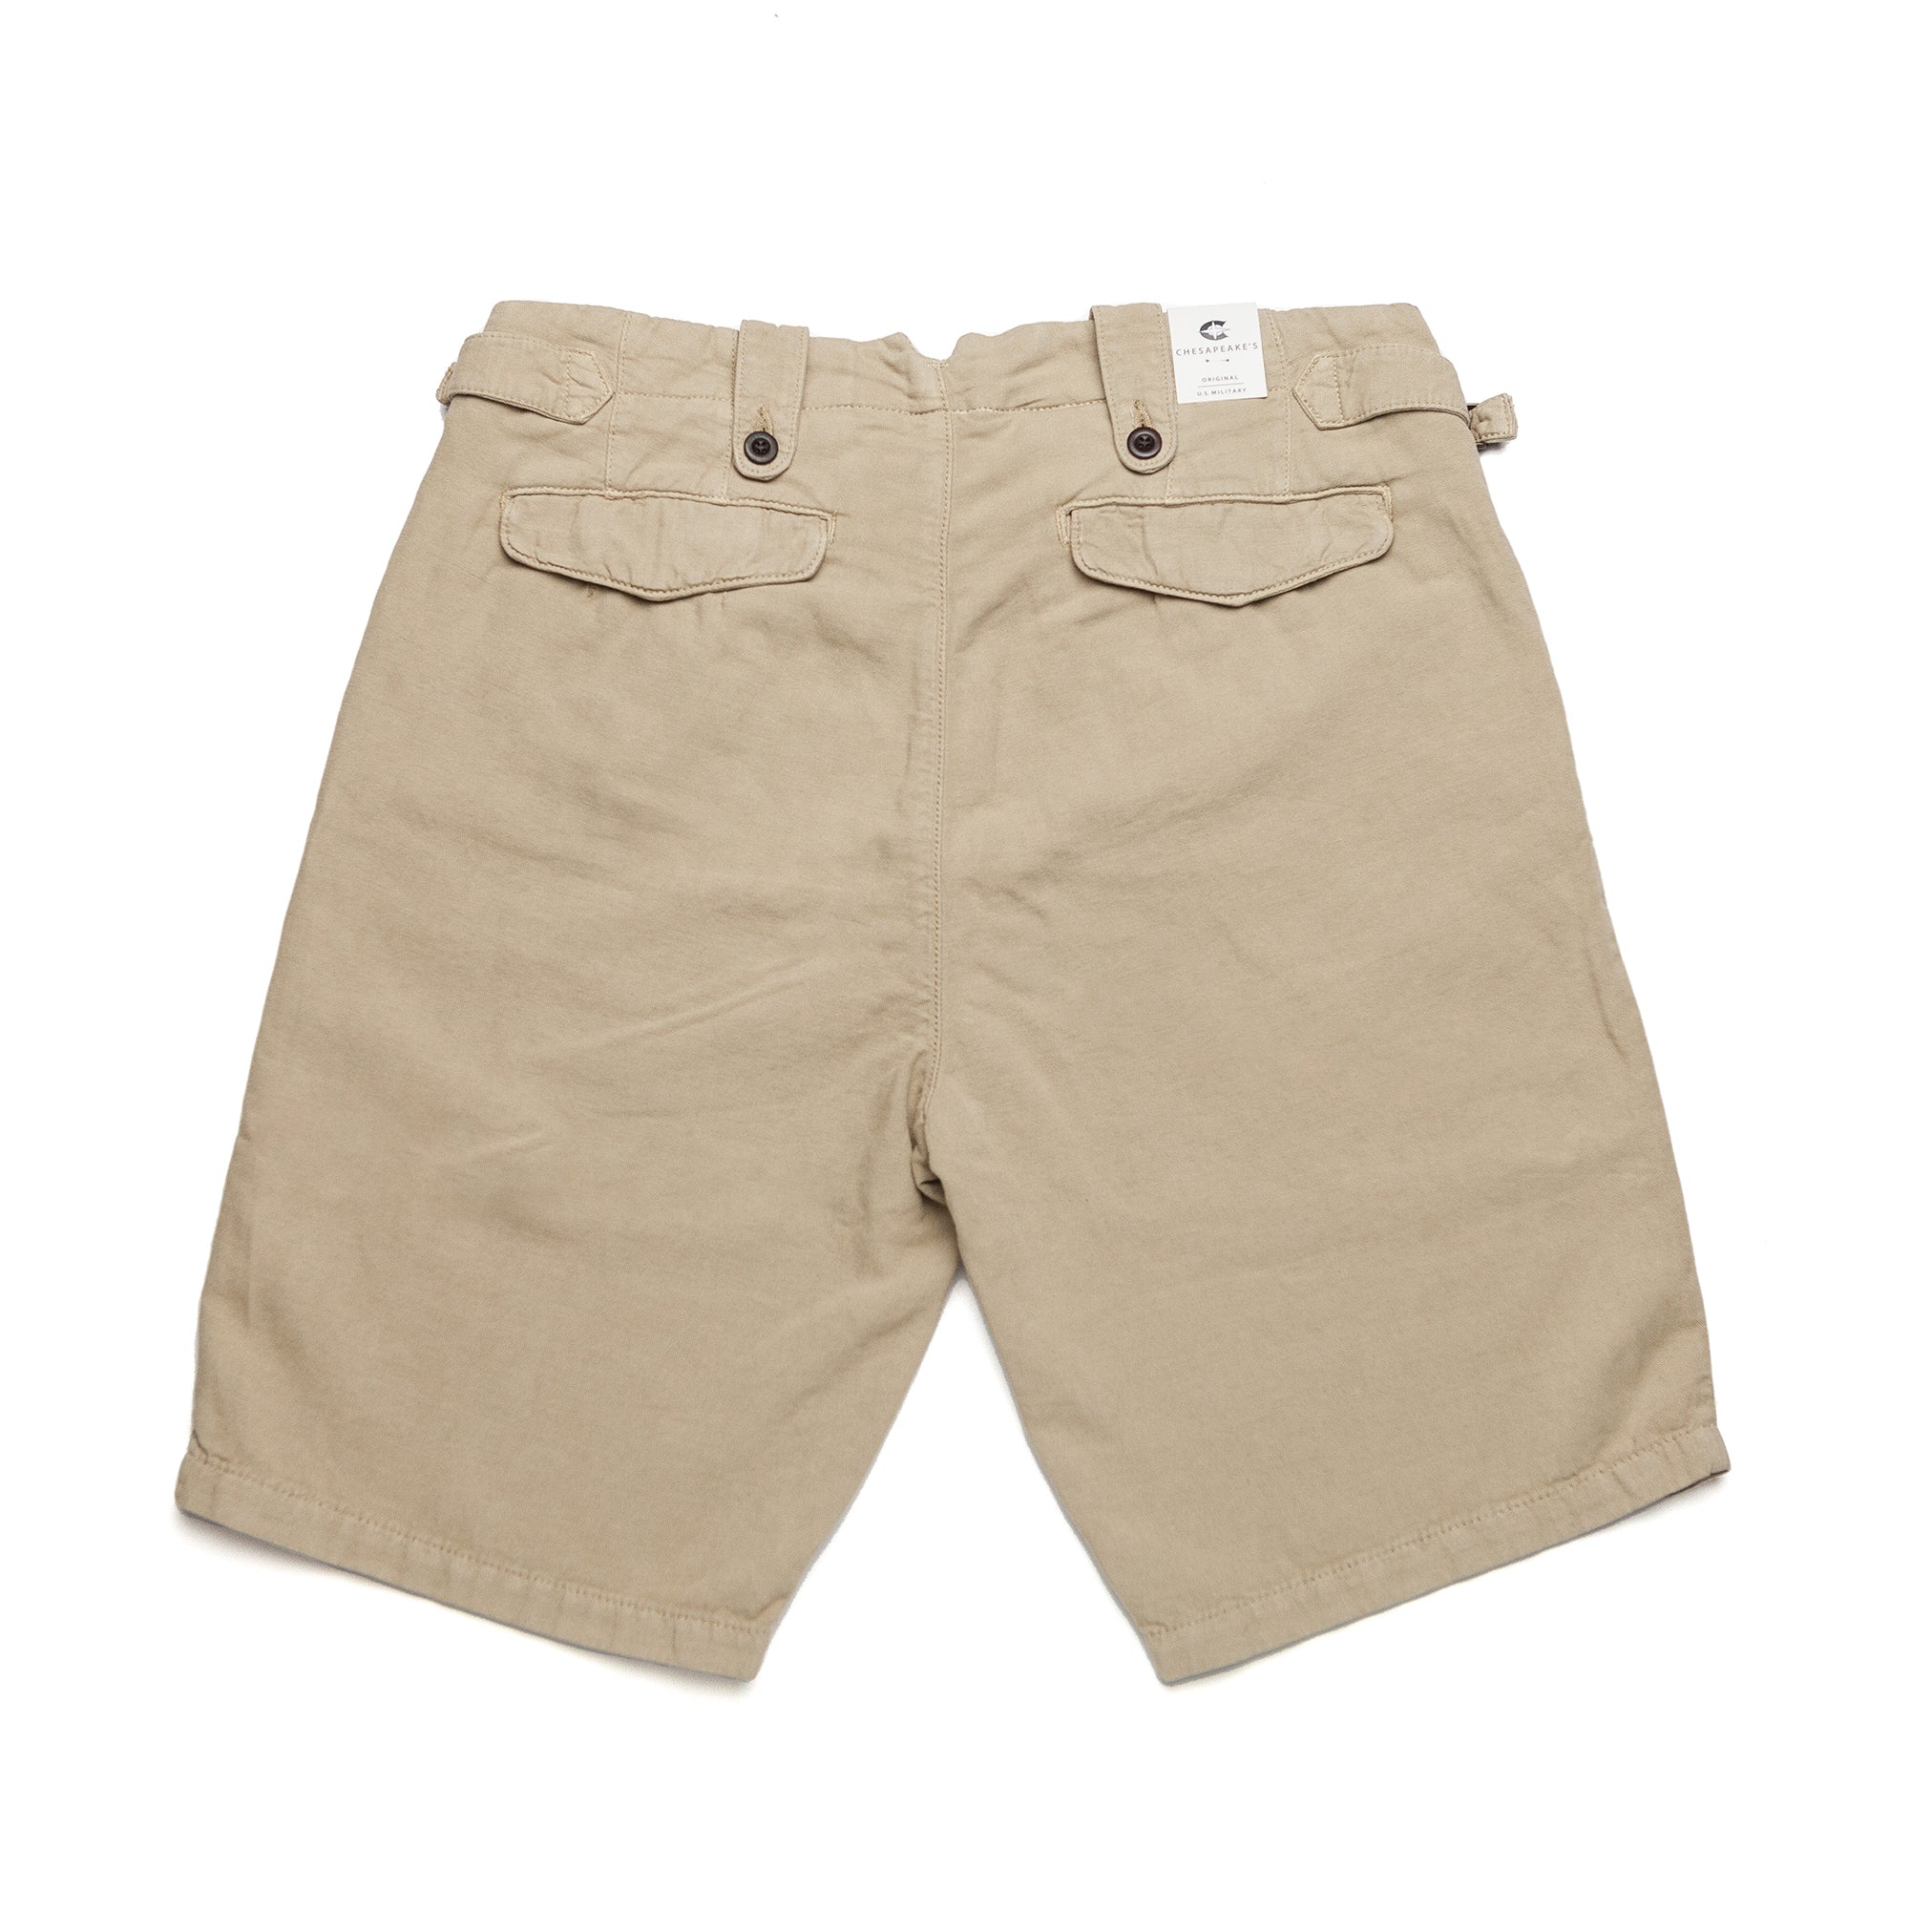 Navarre Cotton & Linen Shorts in Sand